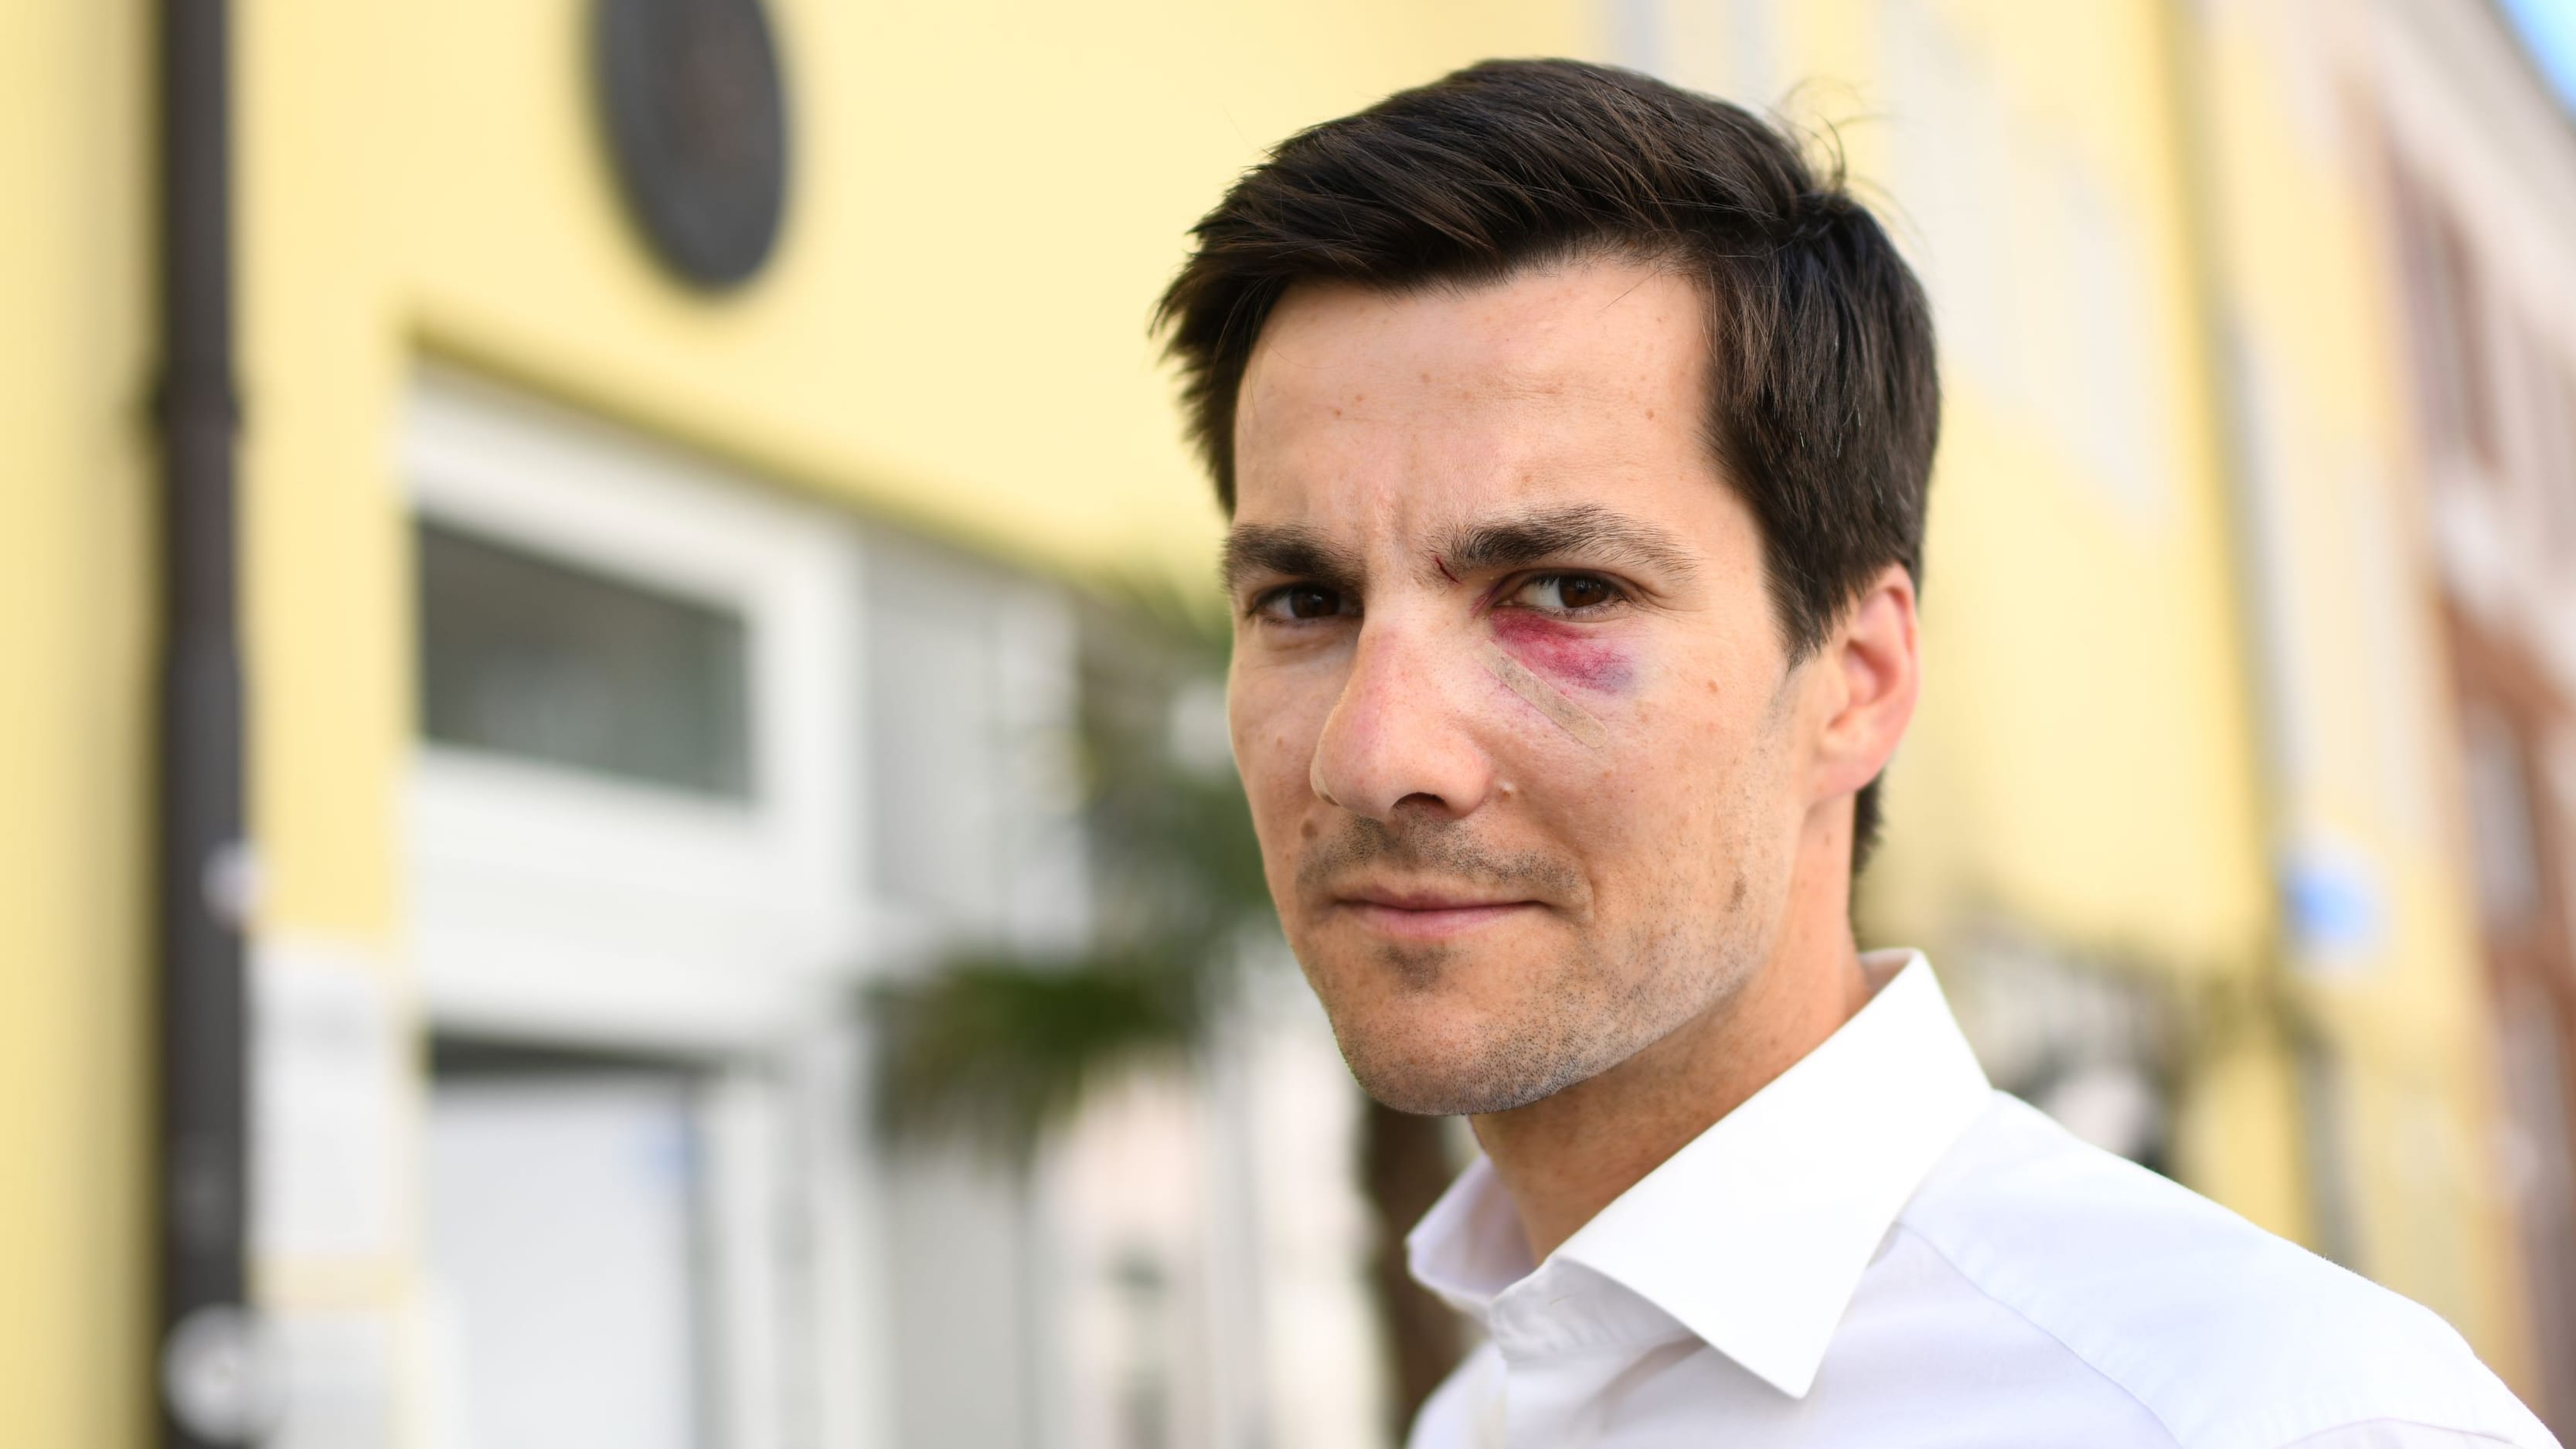 Gewalt gegen Politiker: Freiburgs Oberbürgermeister Martin Horn verprügelt